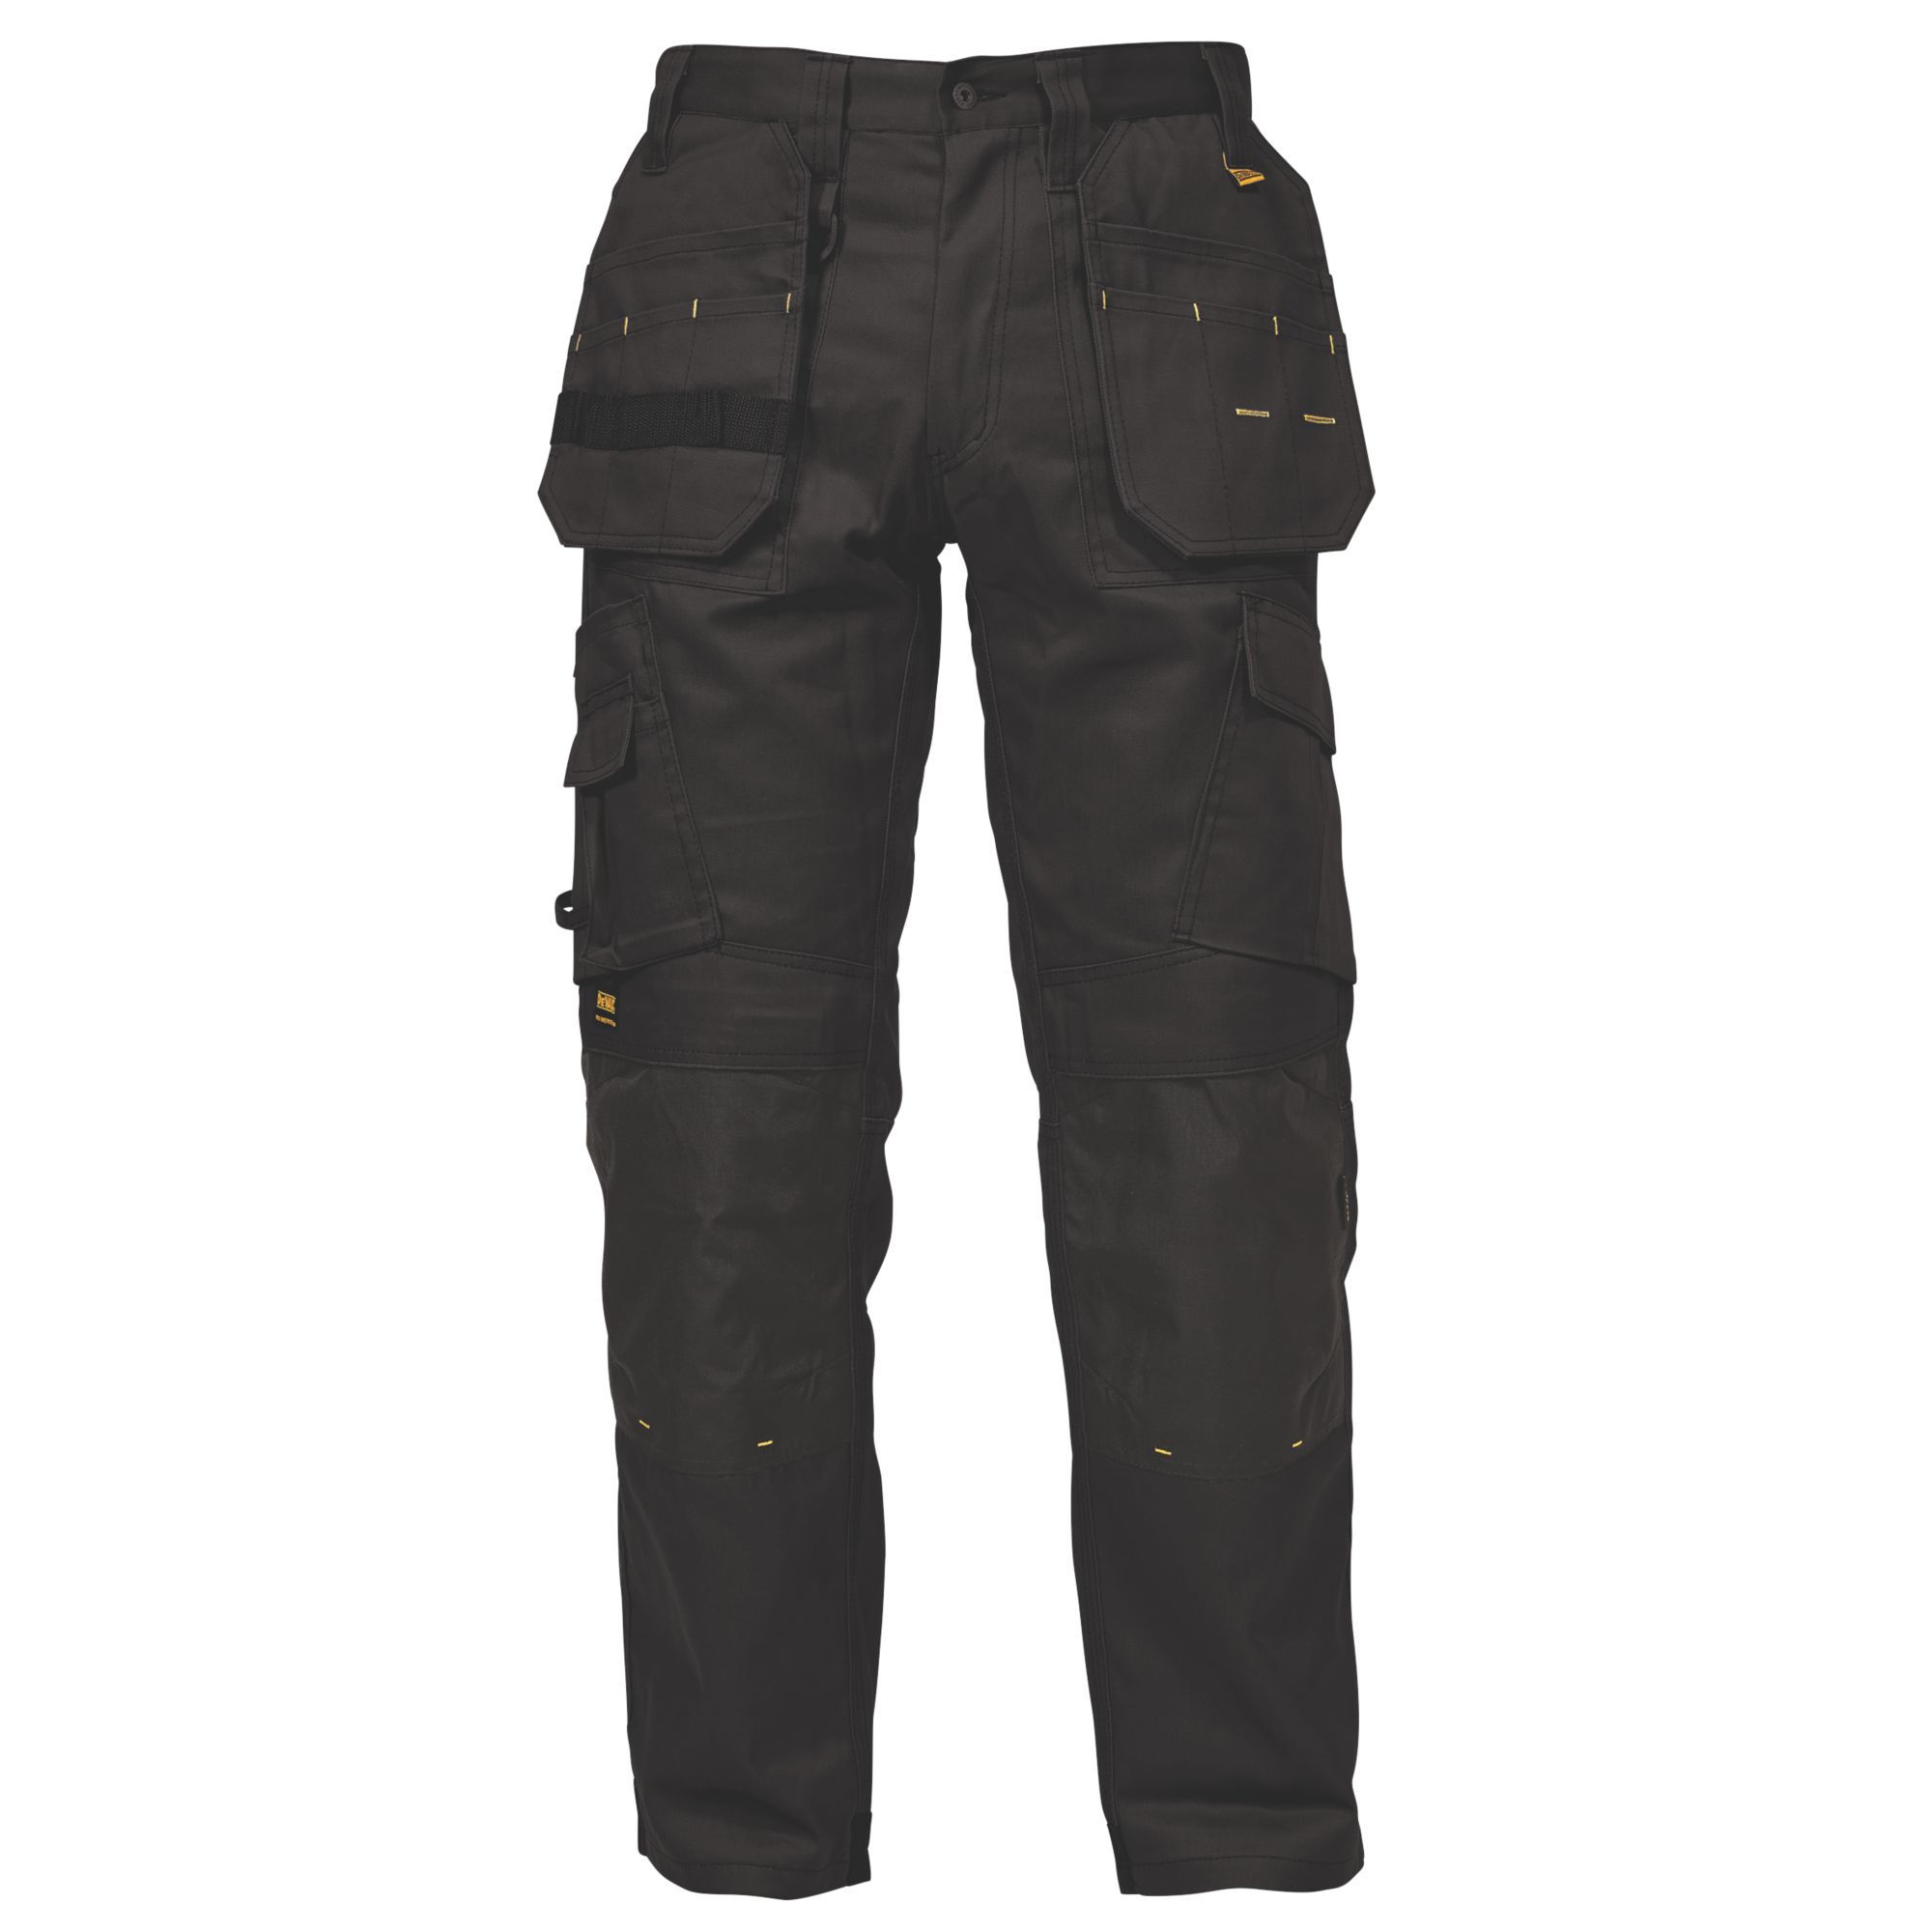 DeWalt Pro Tradesman Black Trousers, W30